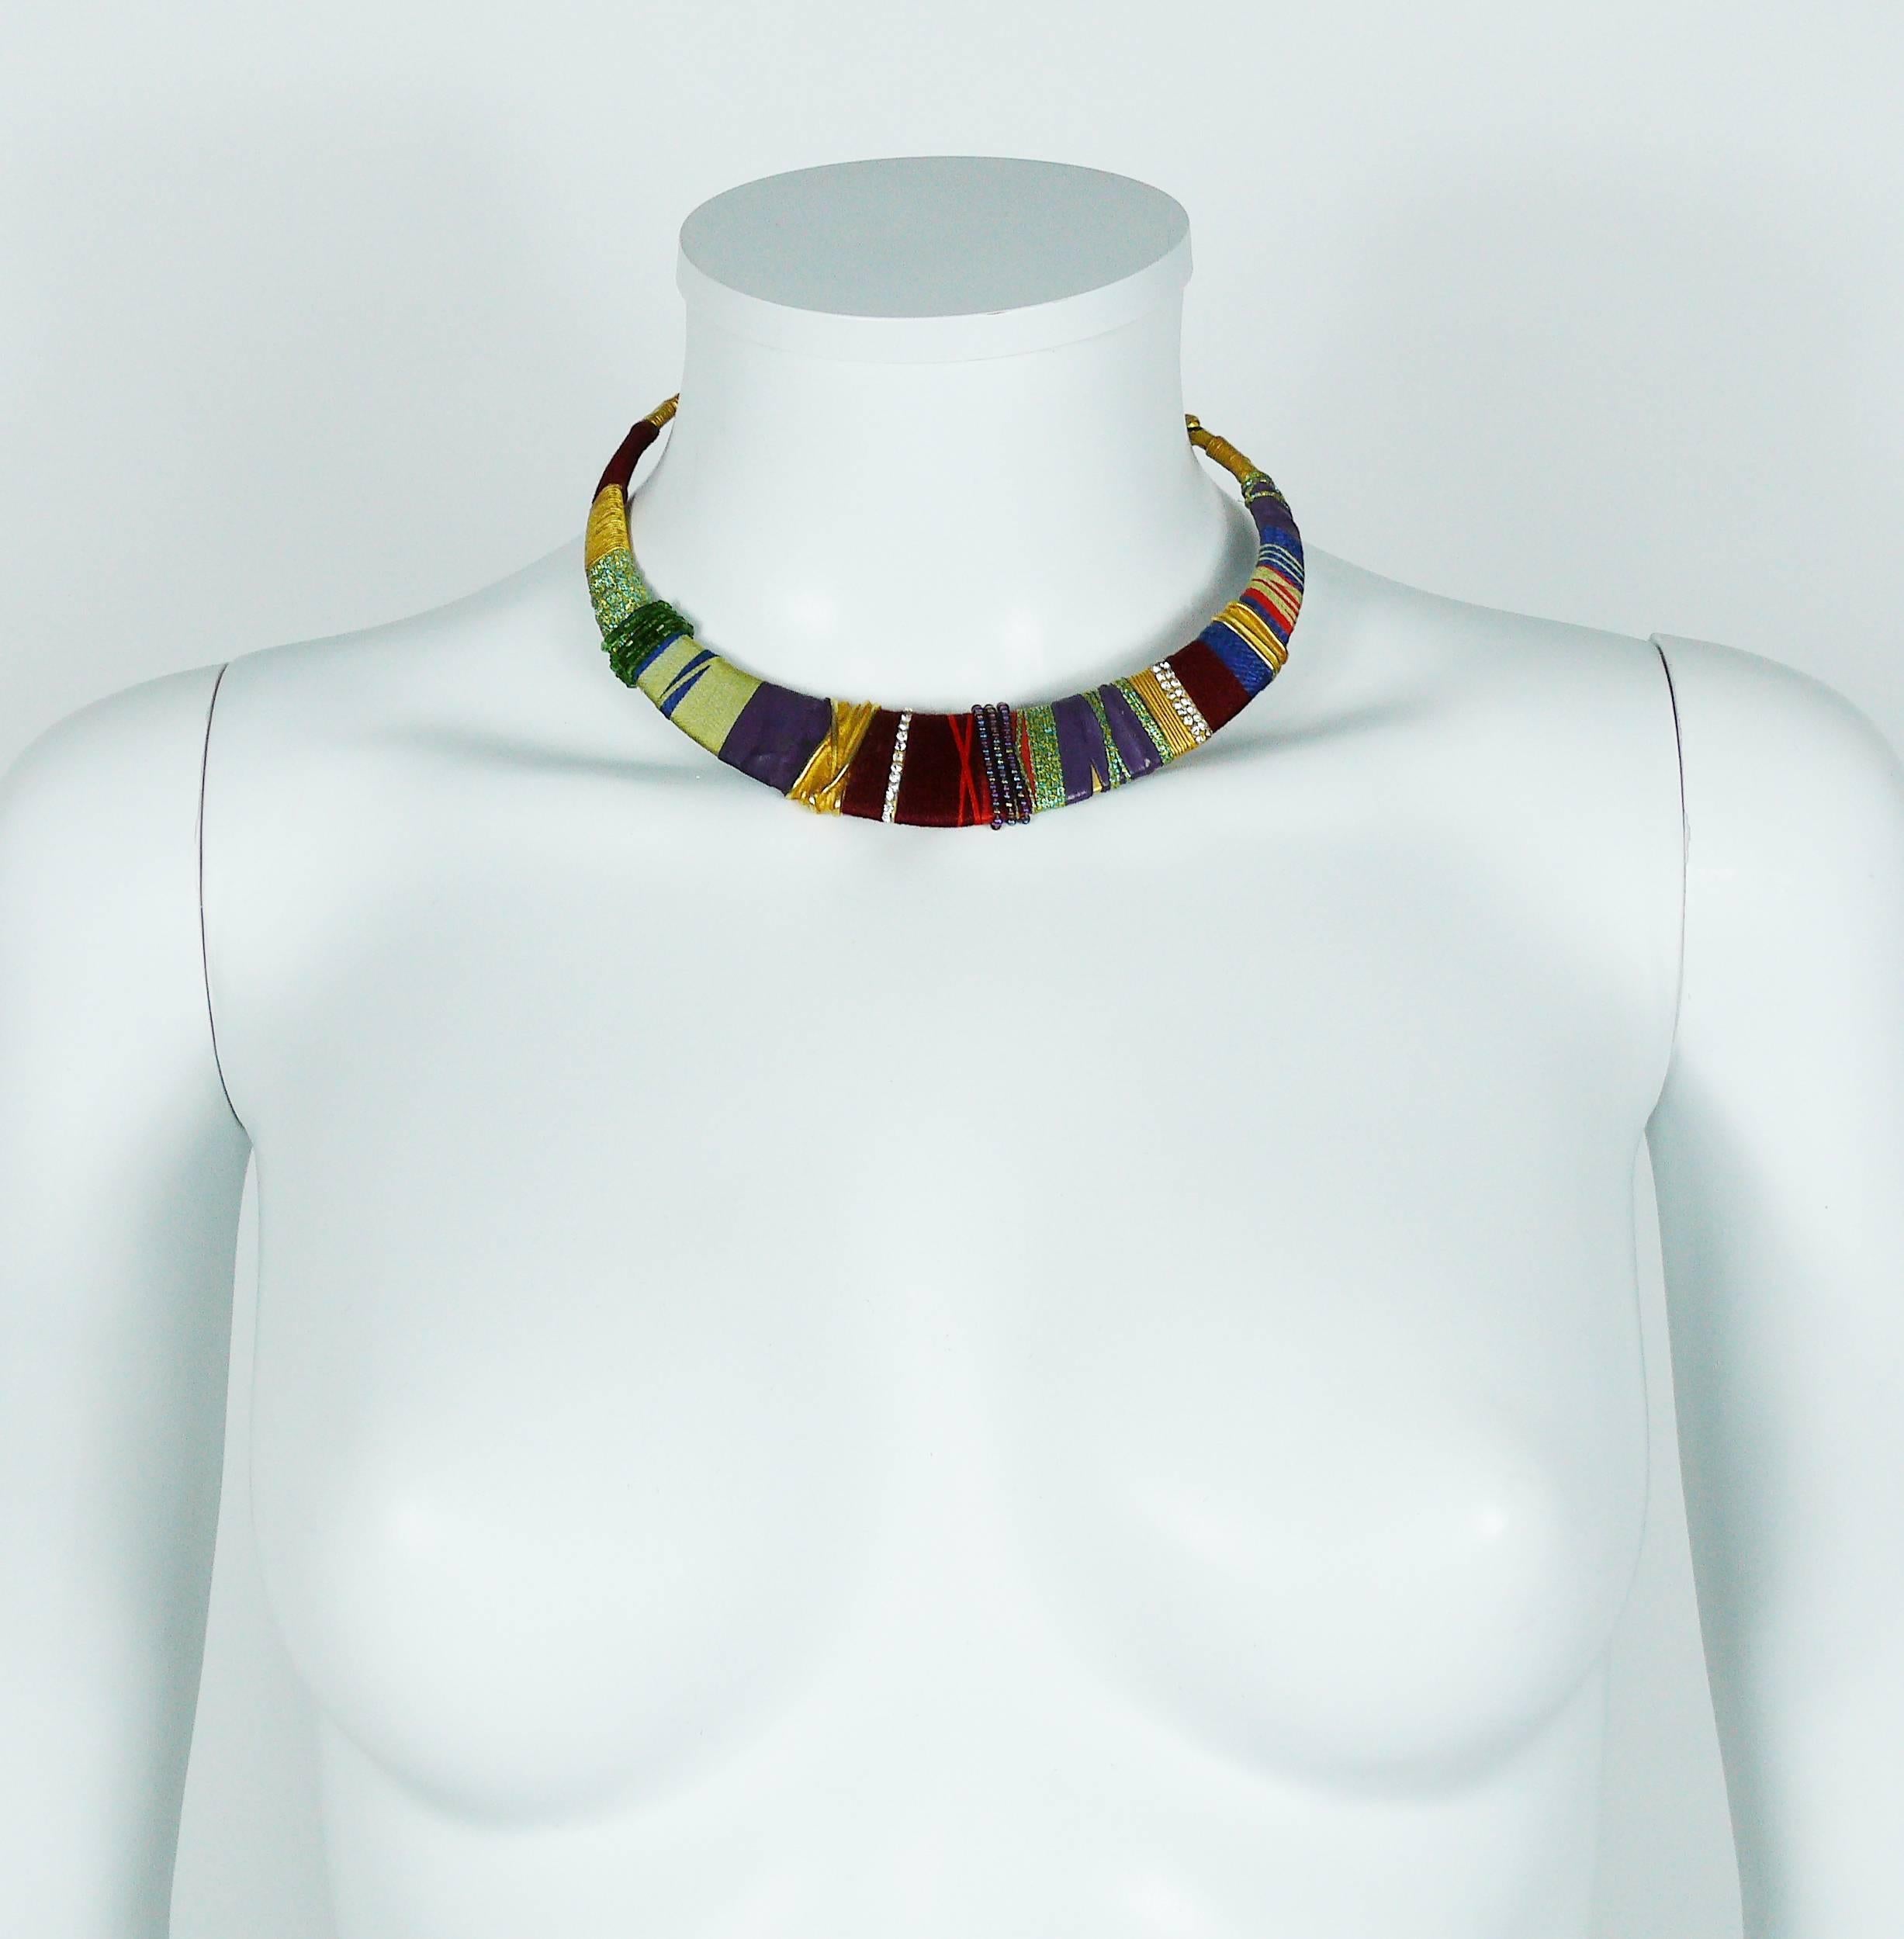 Women's Christian Lacroix Vintage Masai Inspired Choker Necklace